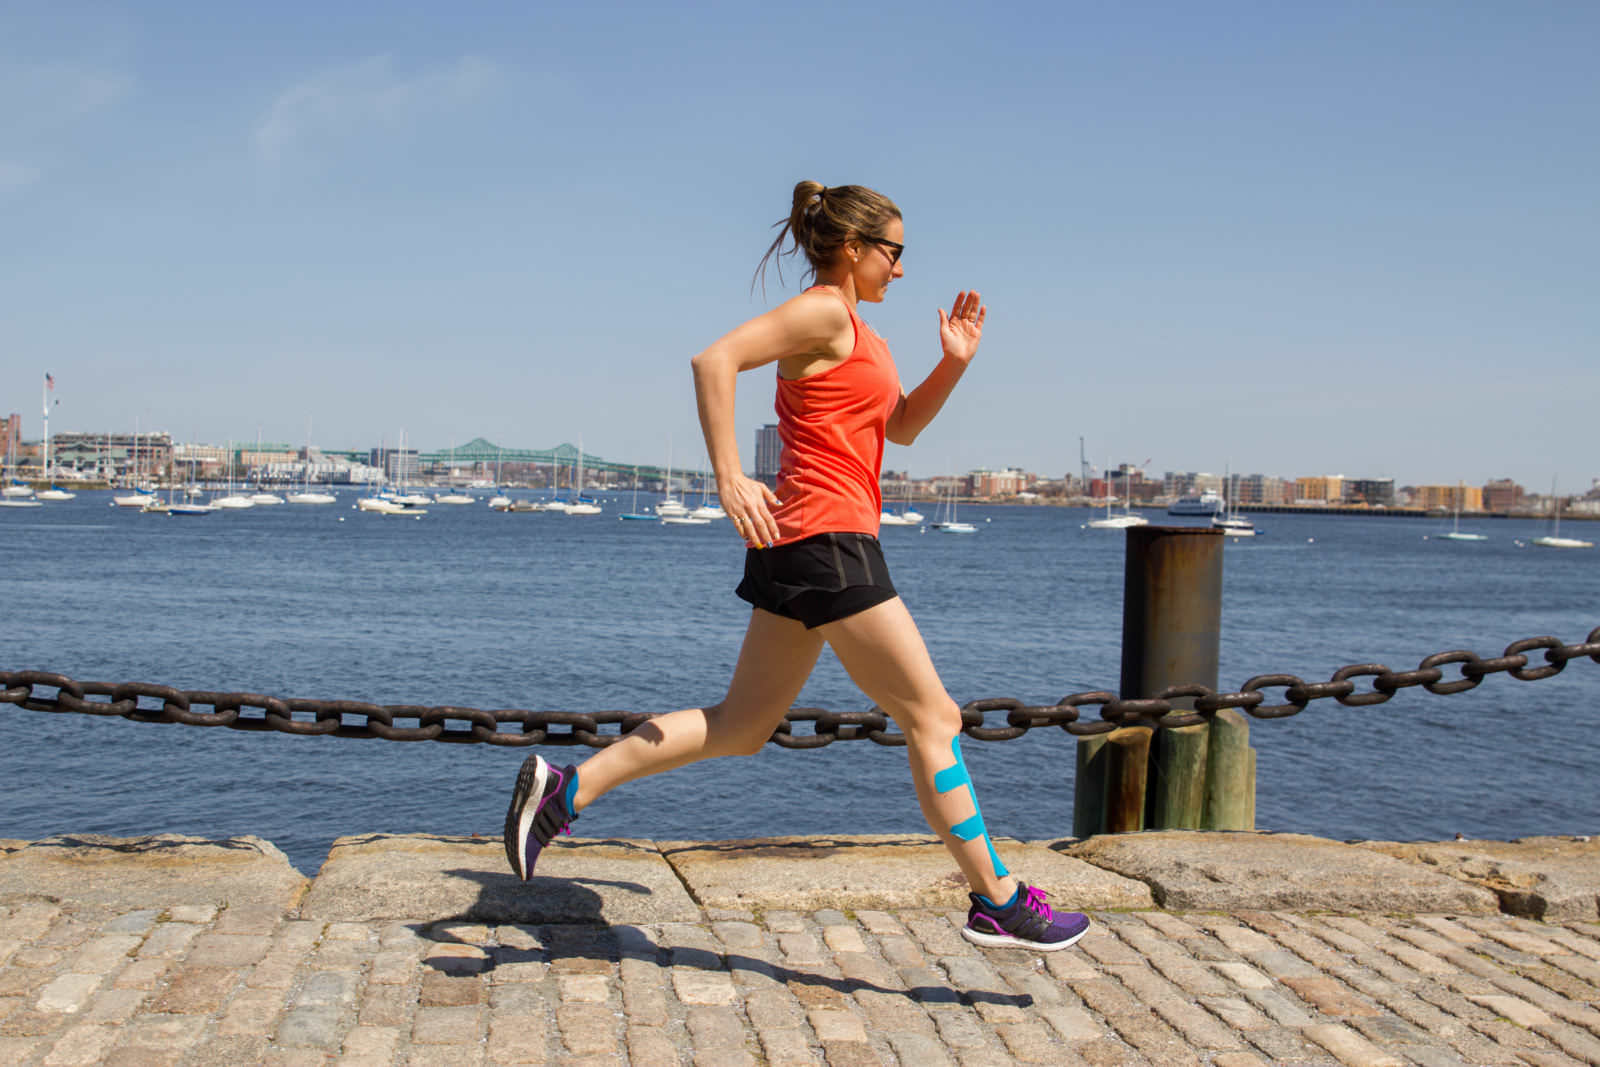 How to write your own training plan for marathons & half marathons